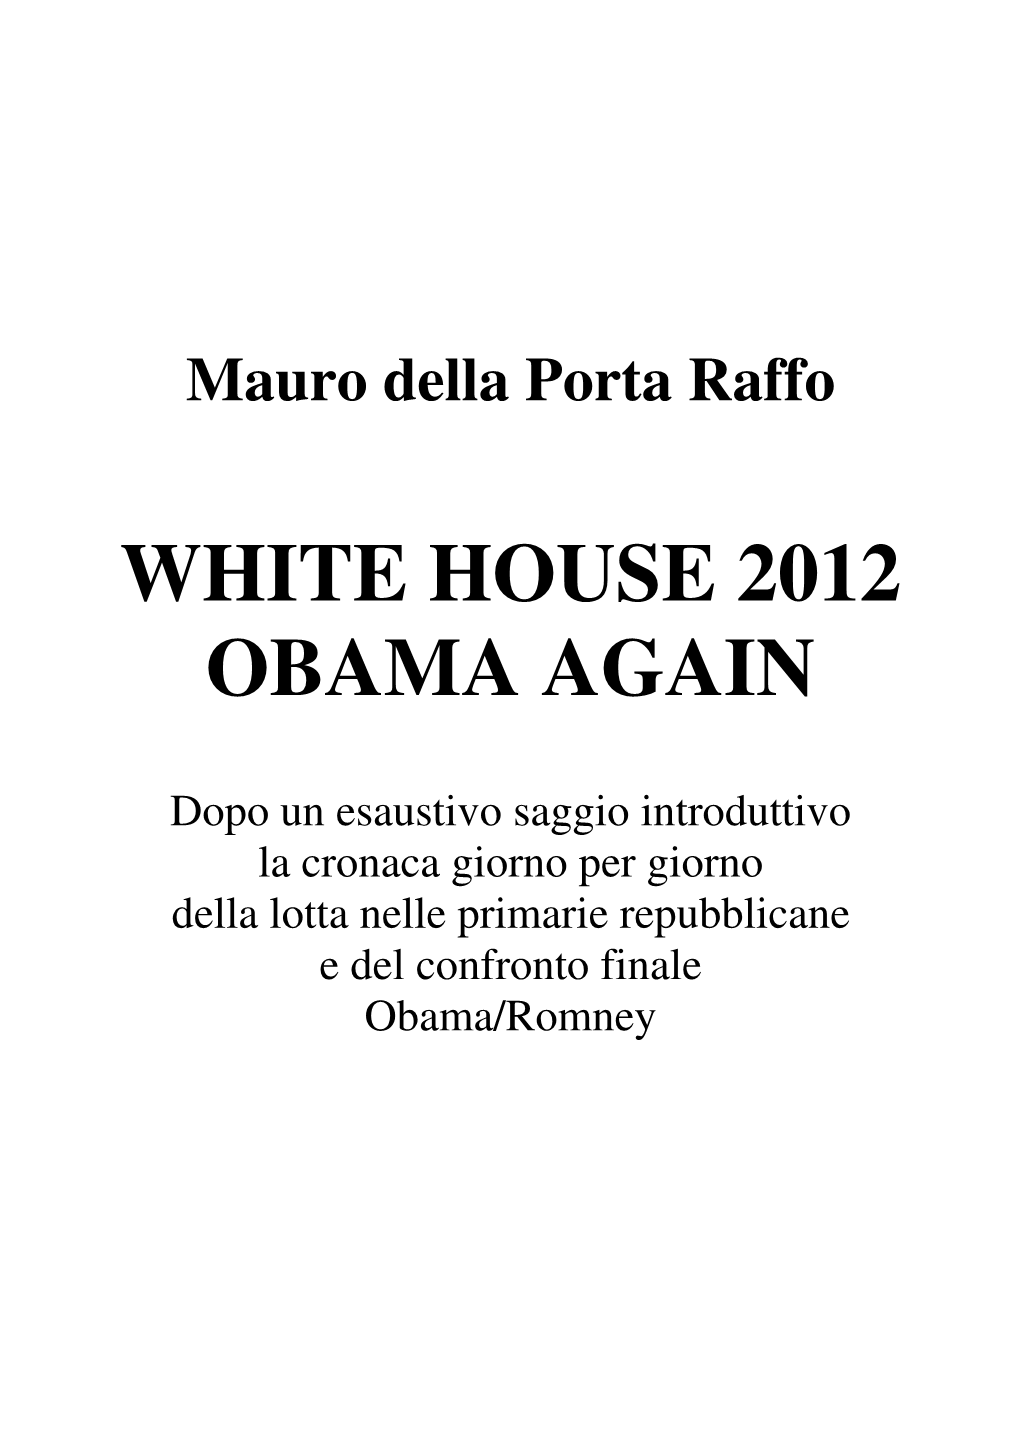 White House 2012 Obama Again